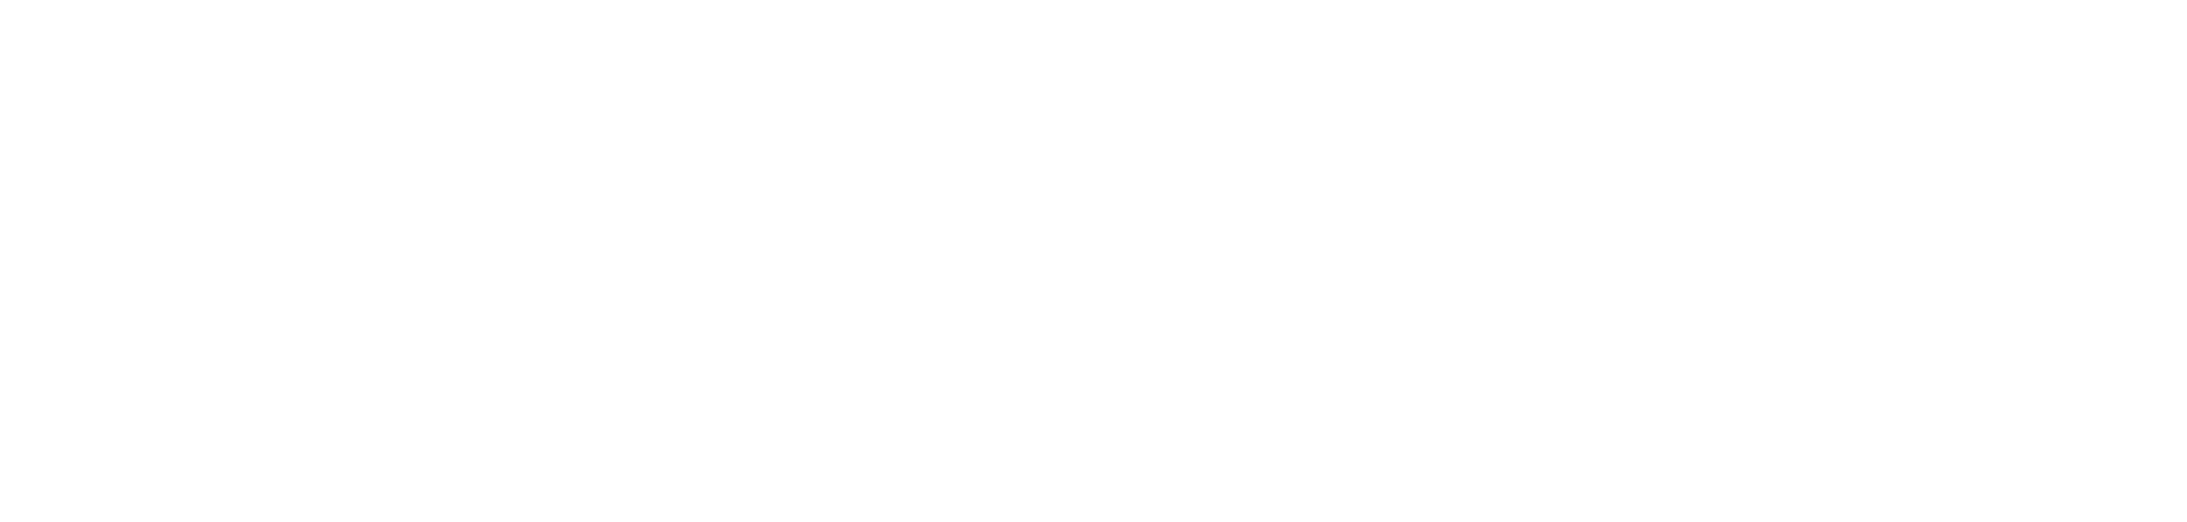 agenda-energy-digital-2021_web